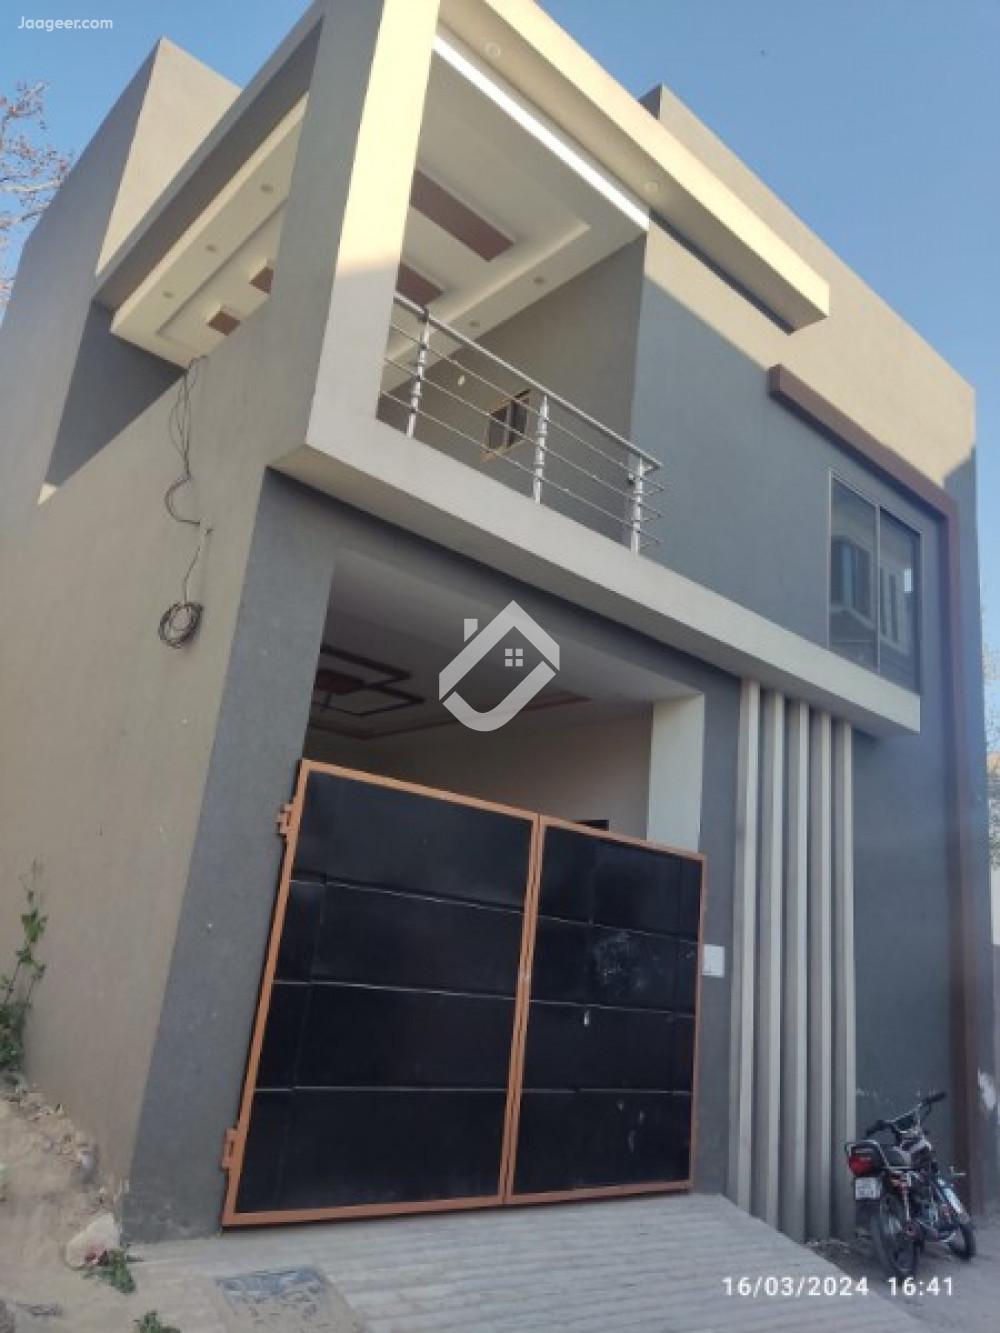 Main image 7 Marla House For Sale In Civil line Civil line sheikhupura